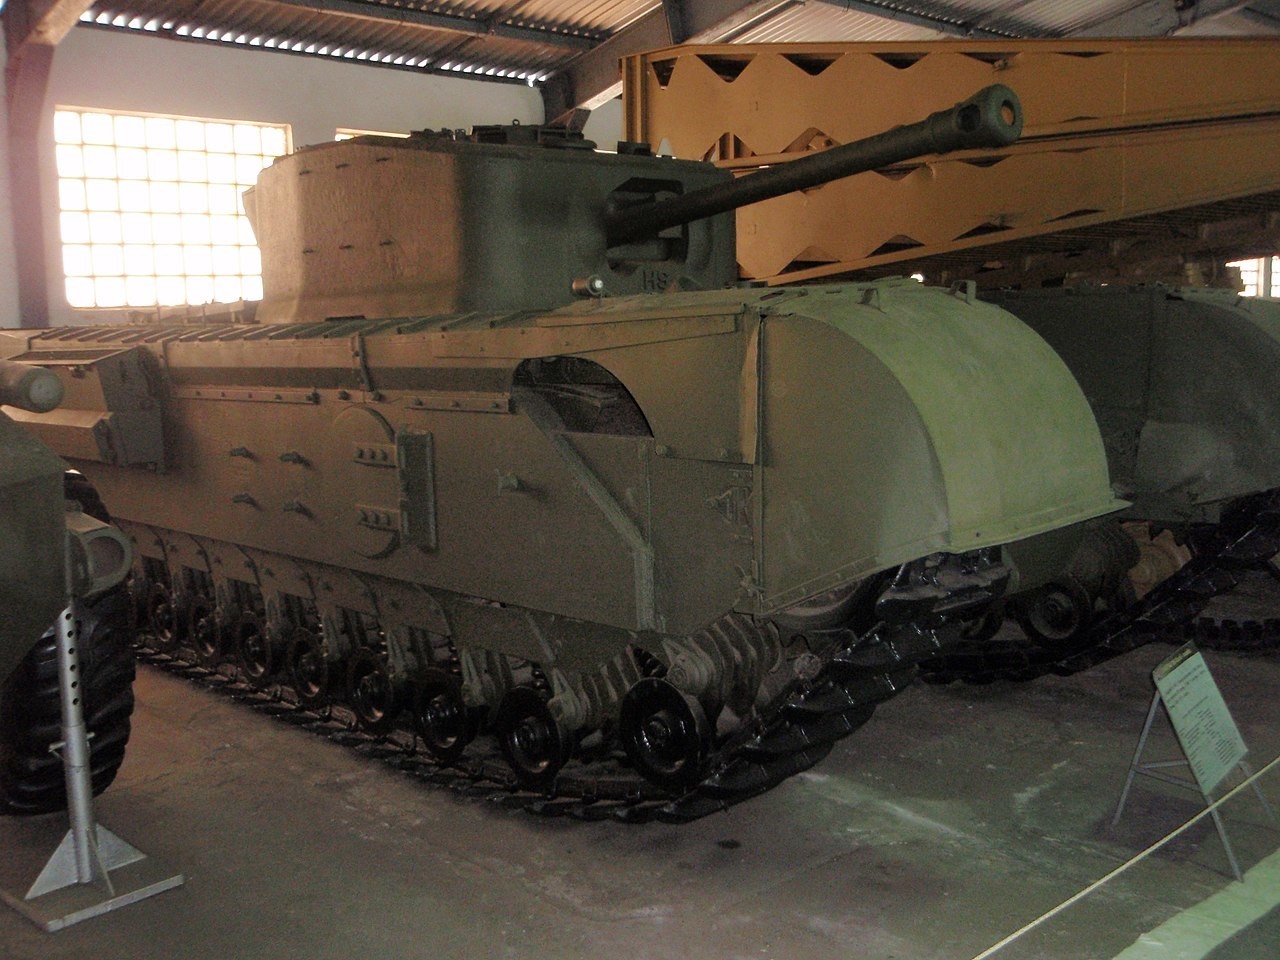 Mk.IV (Churchill-crocodile)

